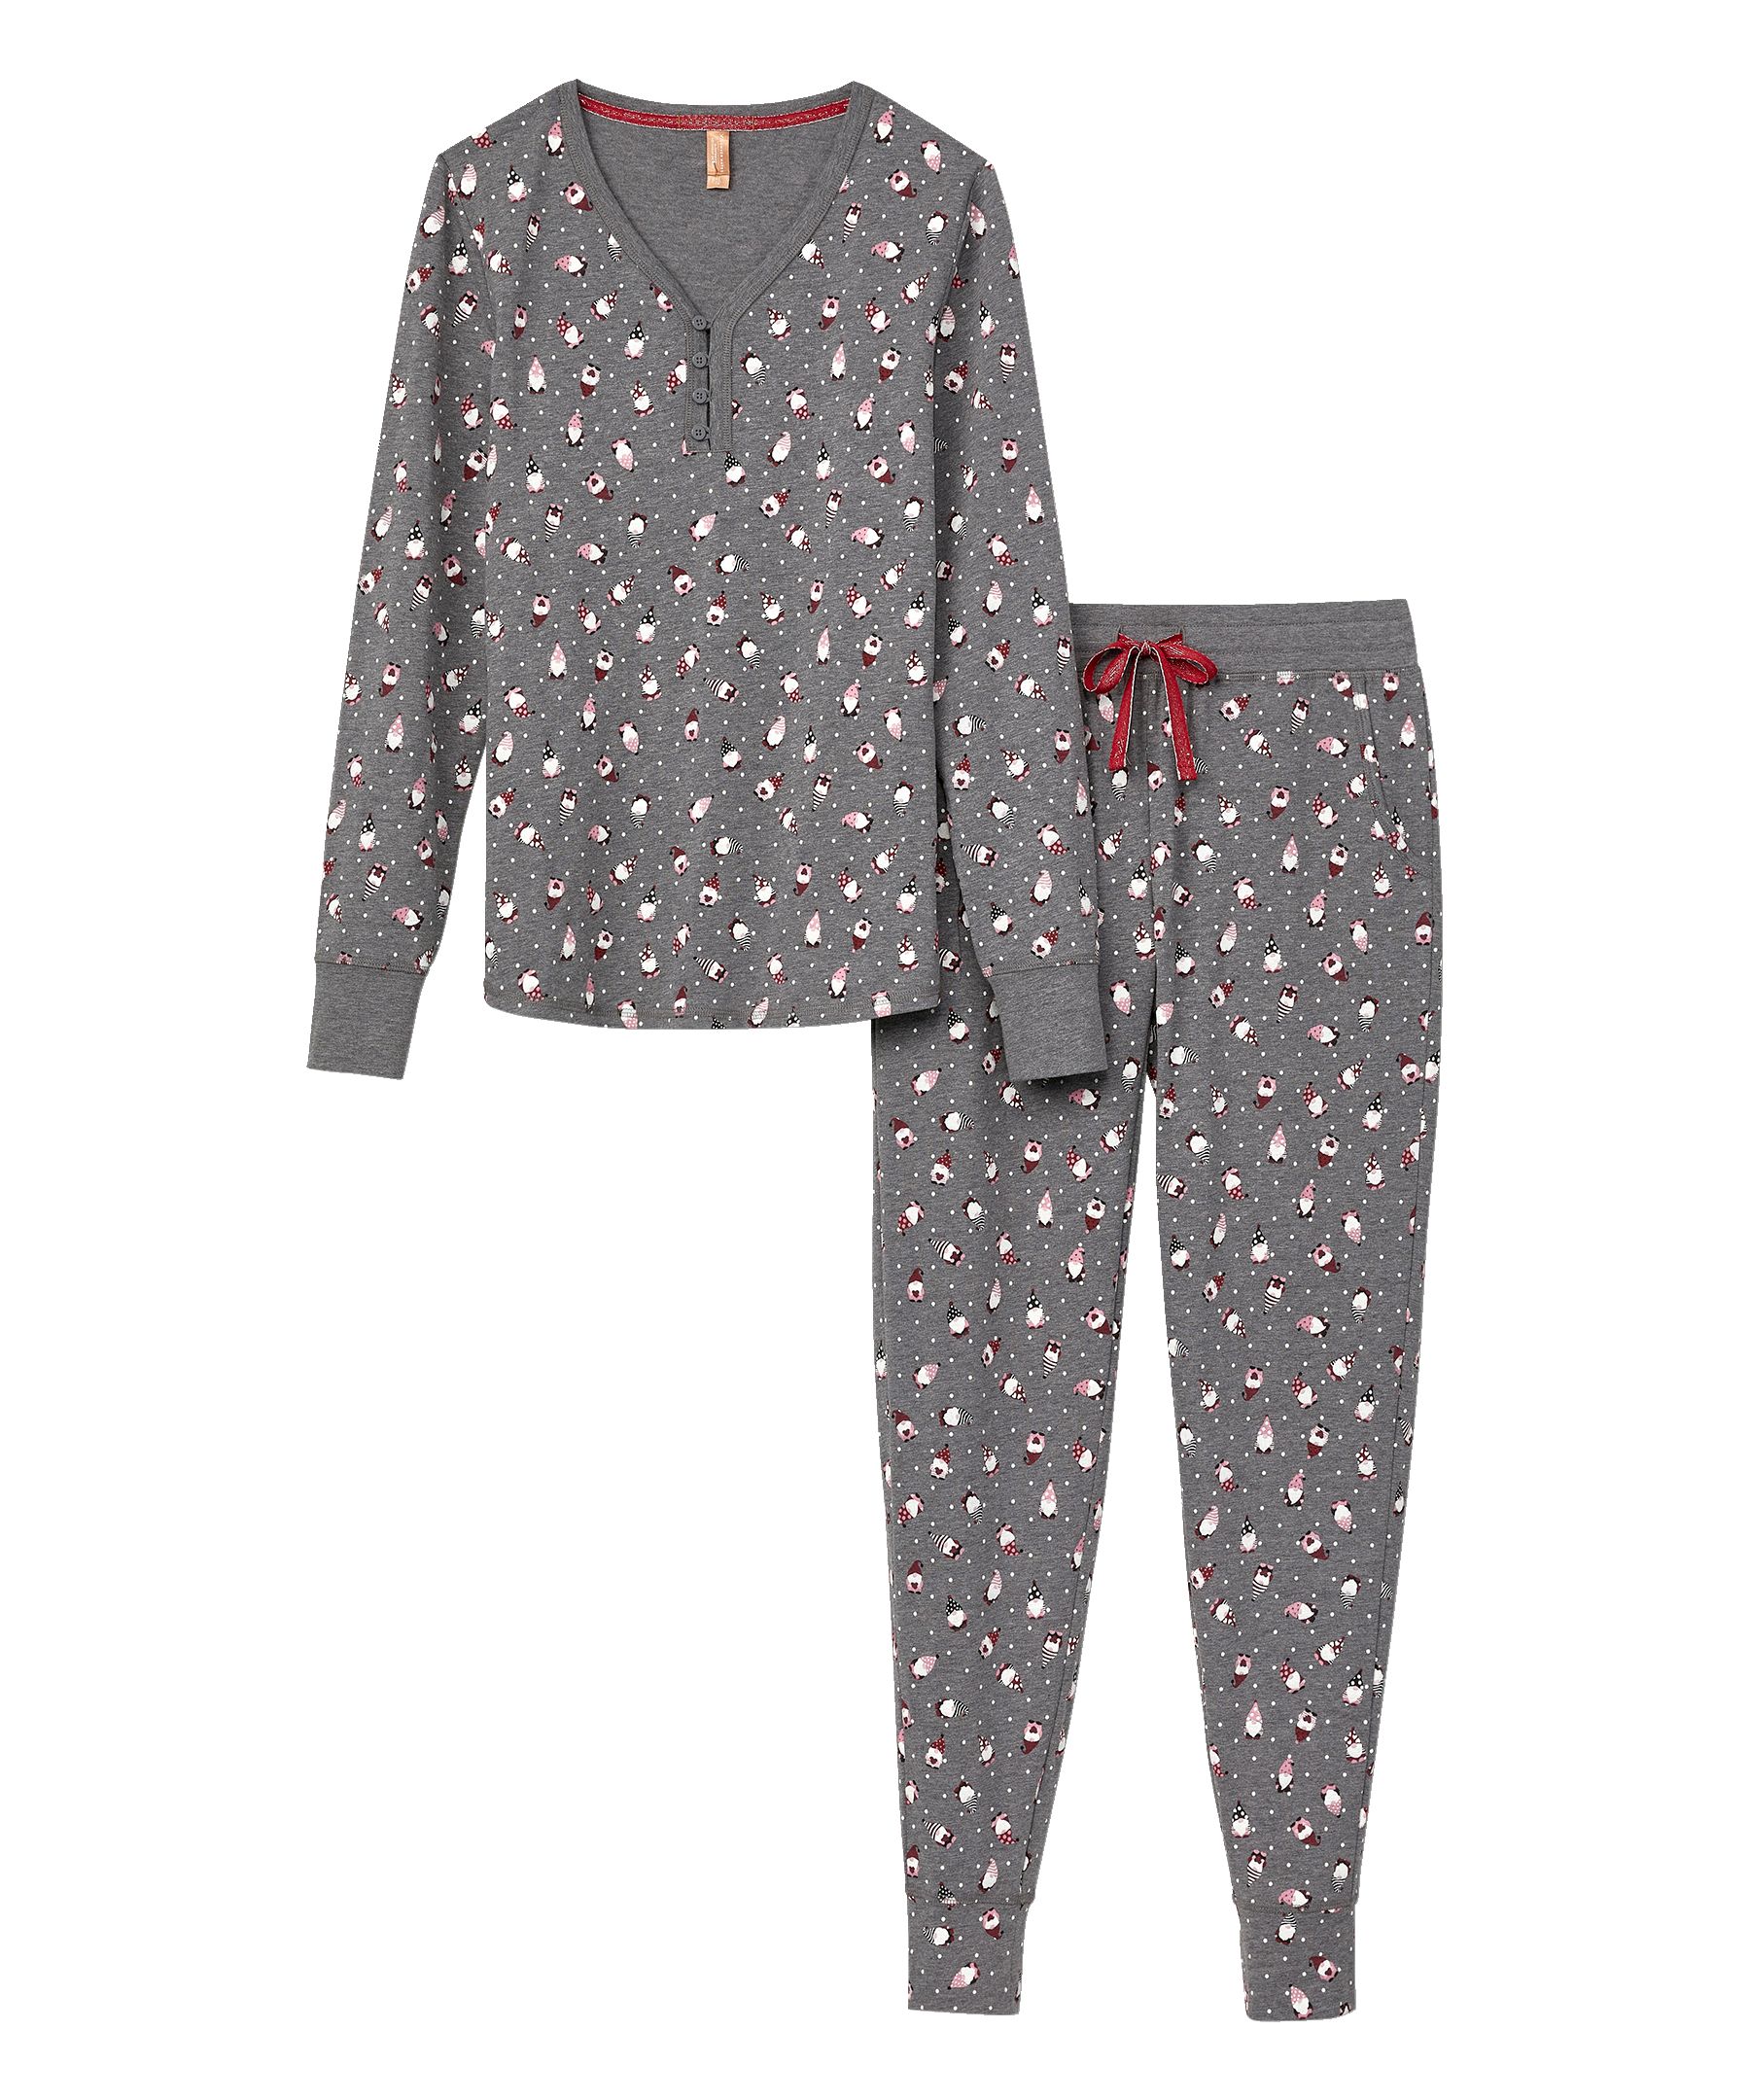 Women Capri Pajama Set 2 Piece Nightwear Bottom Pant Sleepwear Casual Home  Set